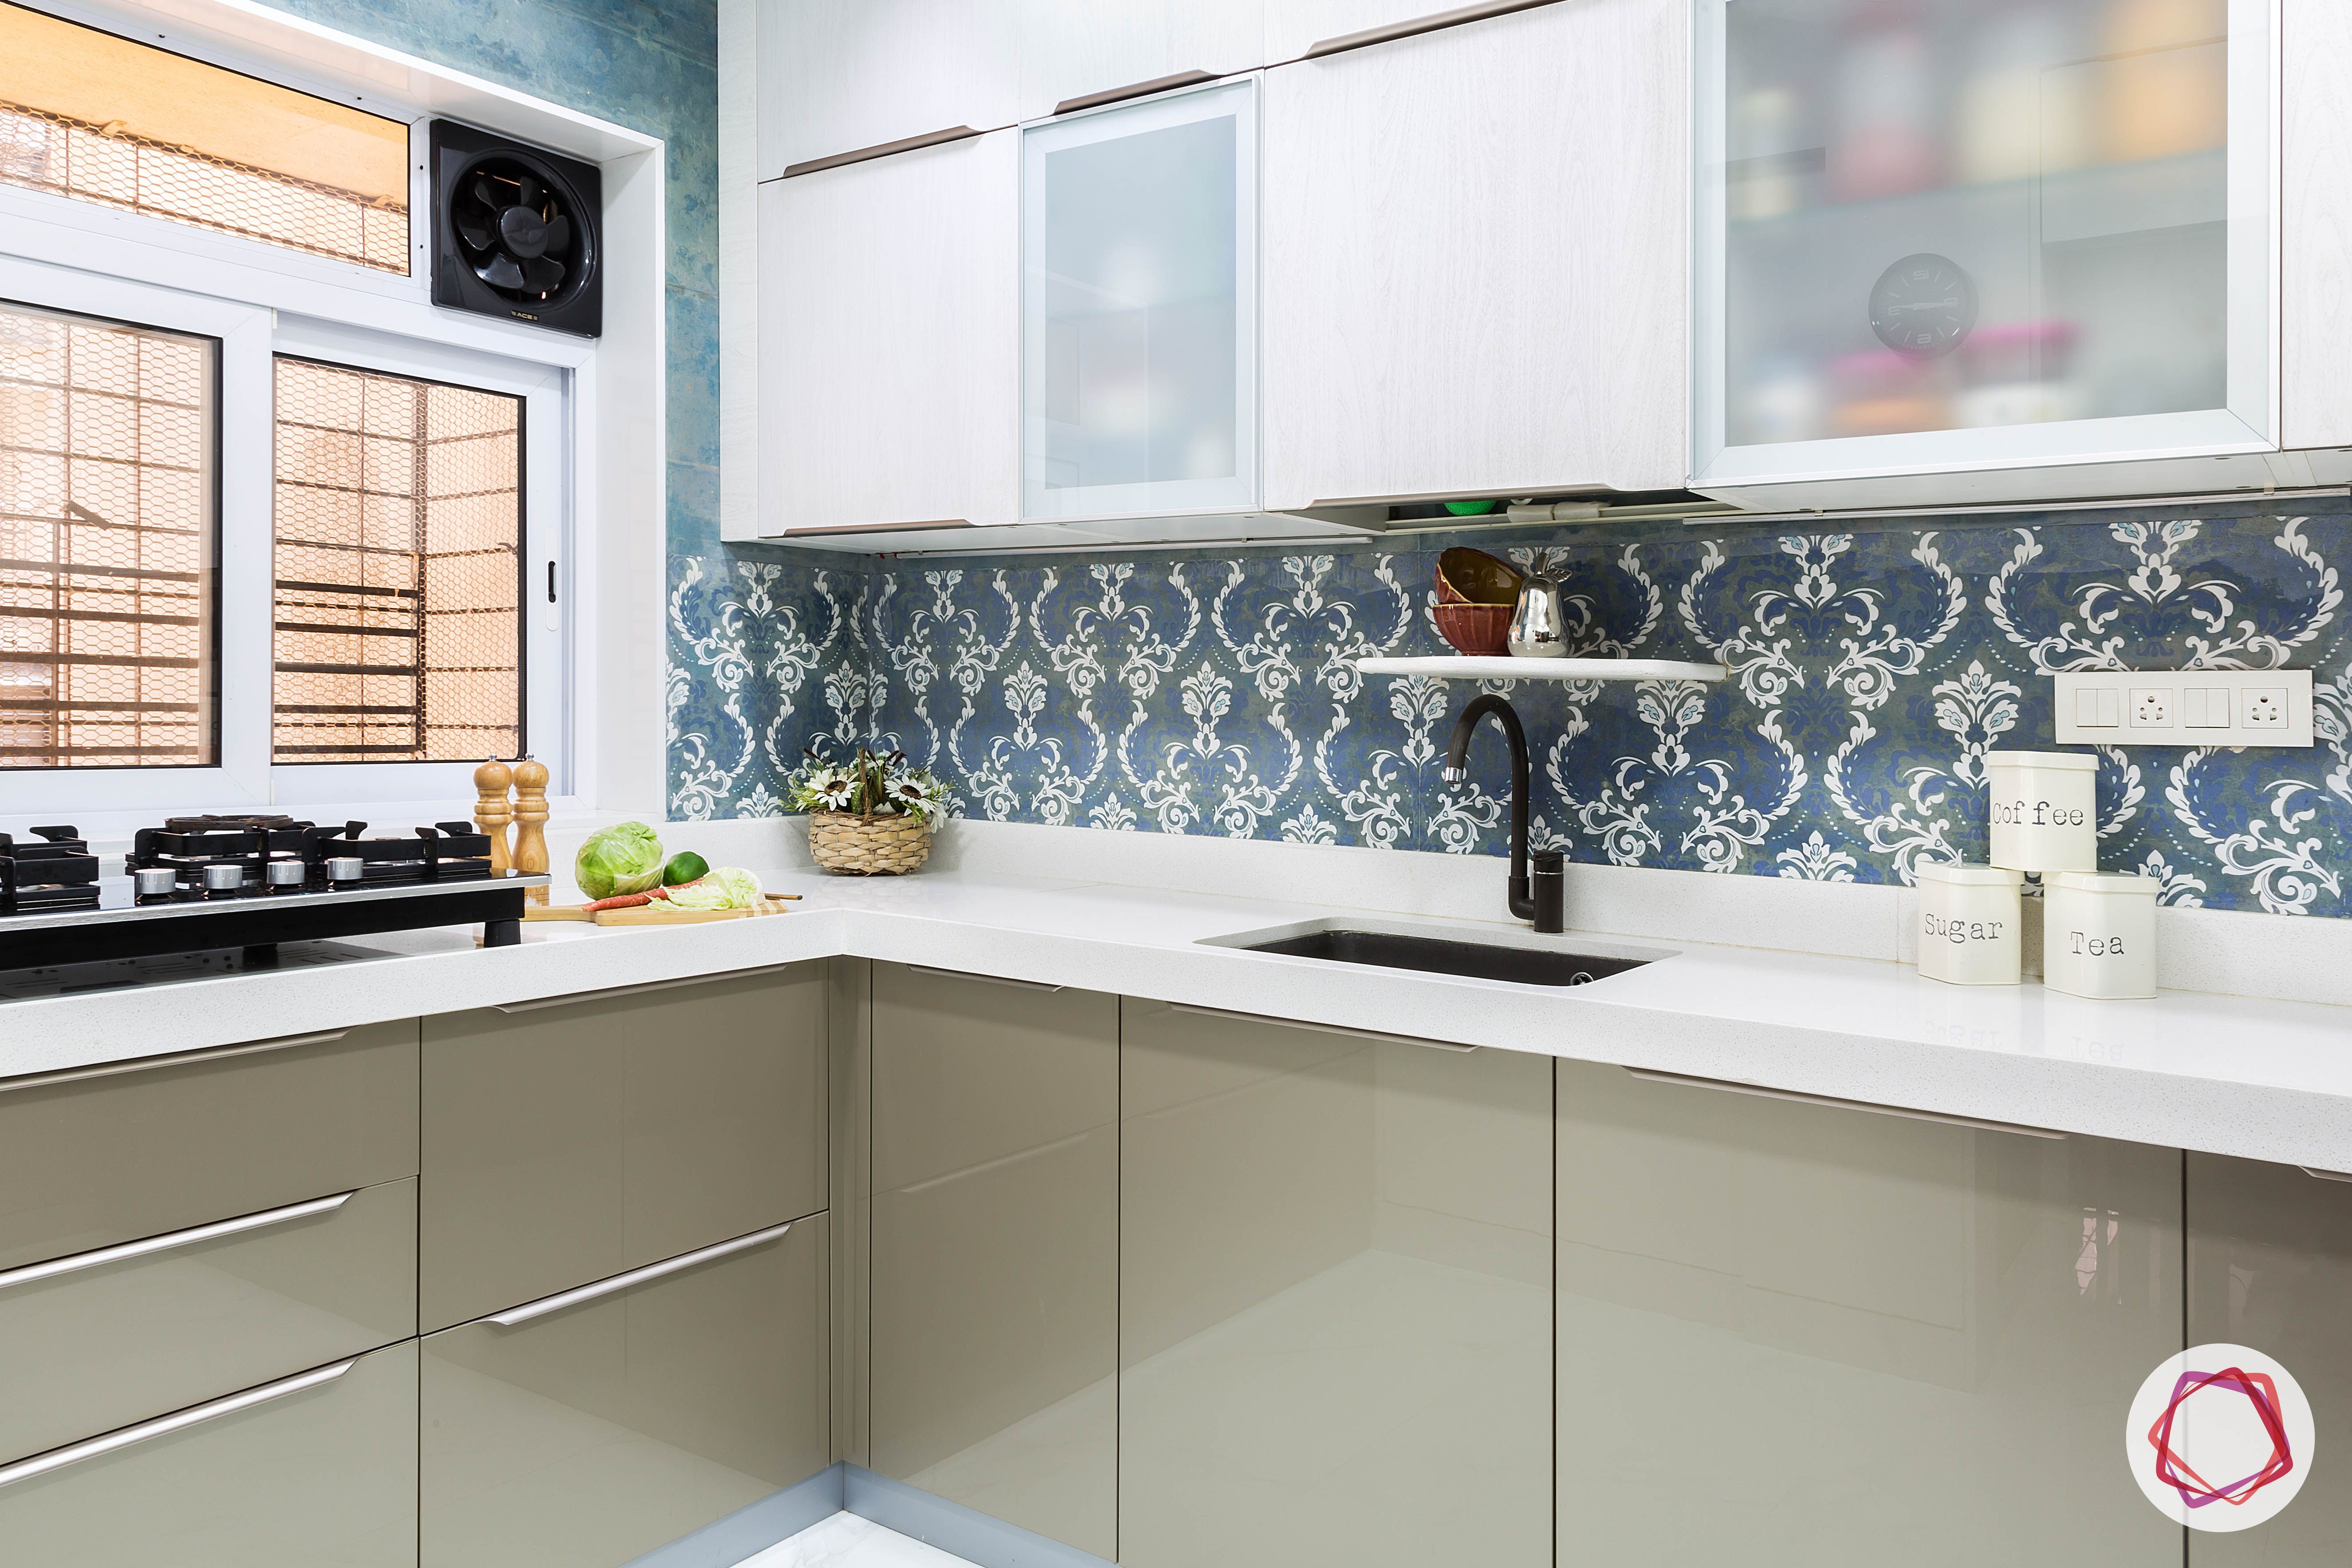 house-renovation-kitchen-white-blue-beige-cabients-countertop-backsplash